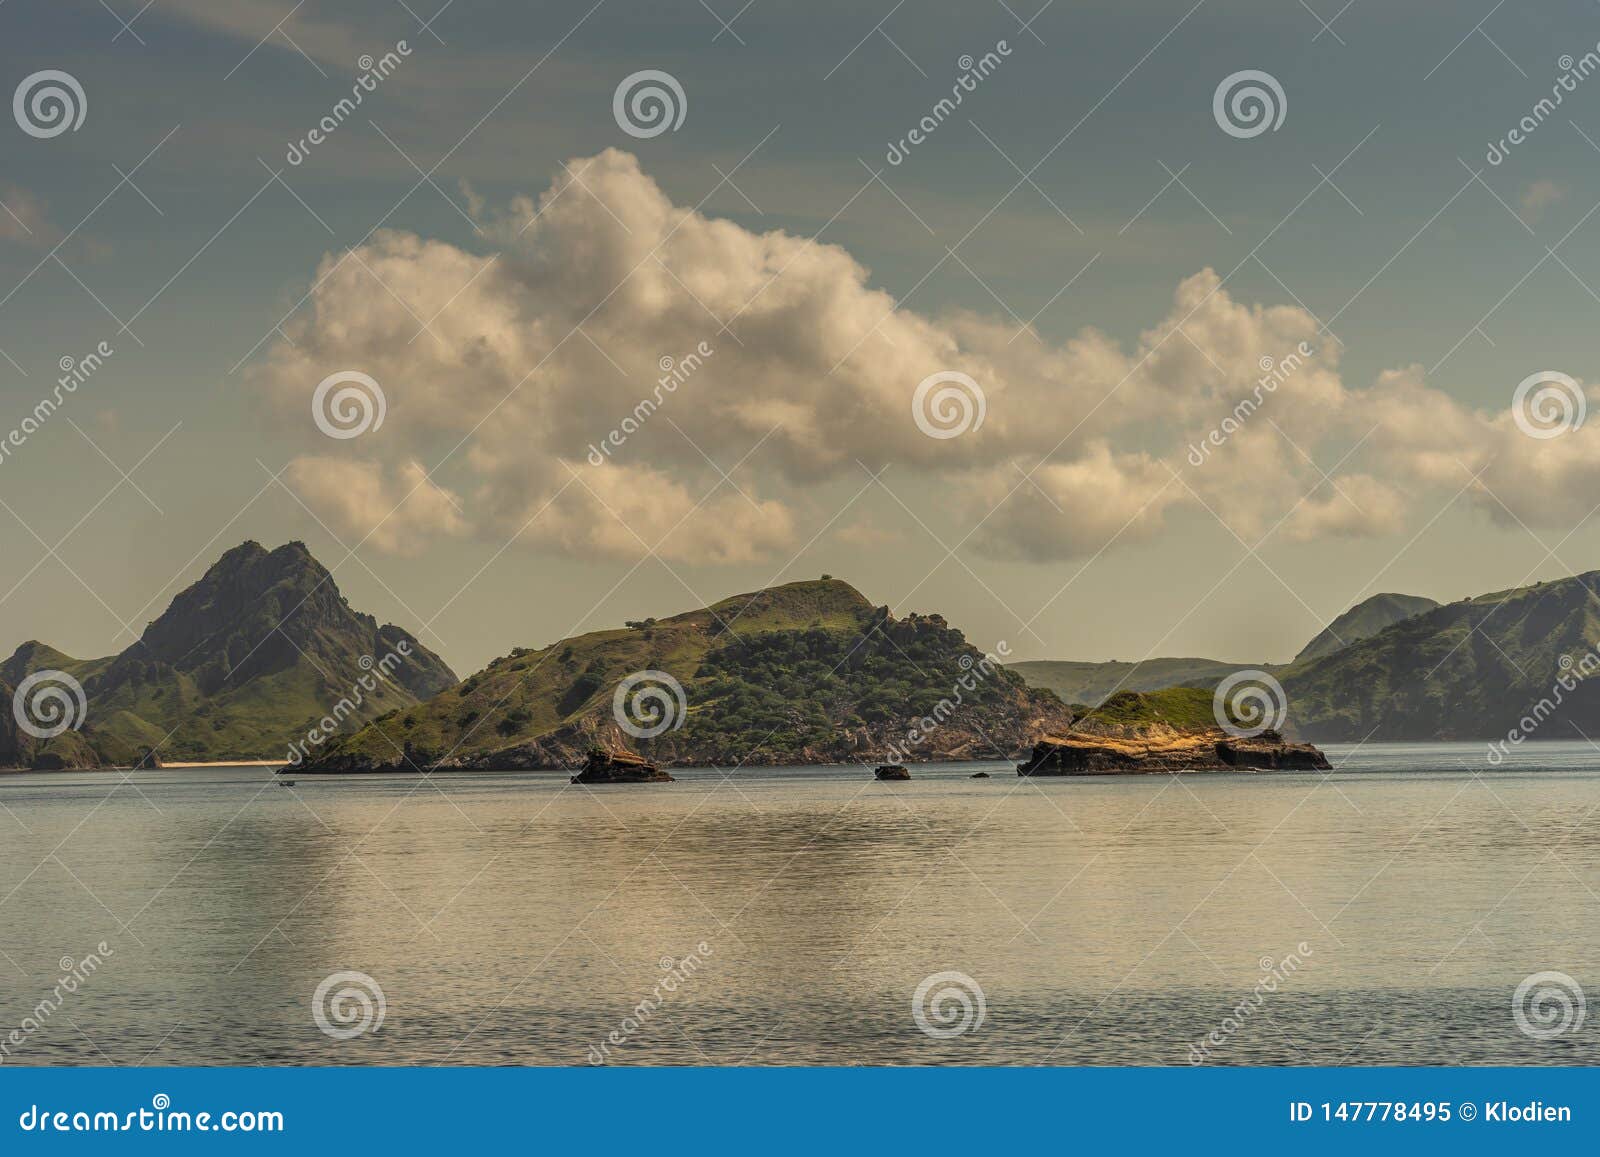 islets and beaches on rinca island westside coast, indonesia